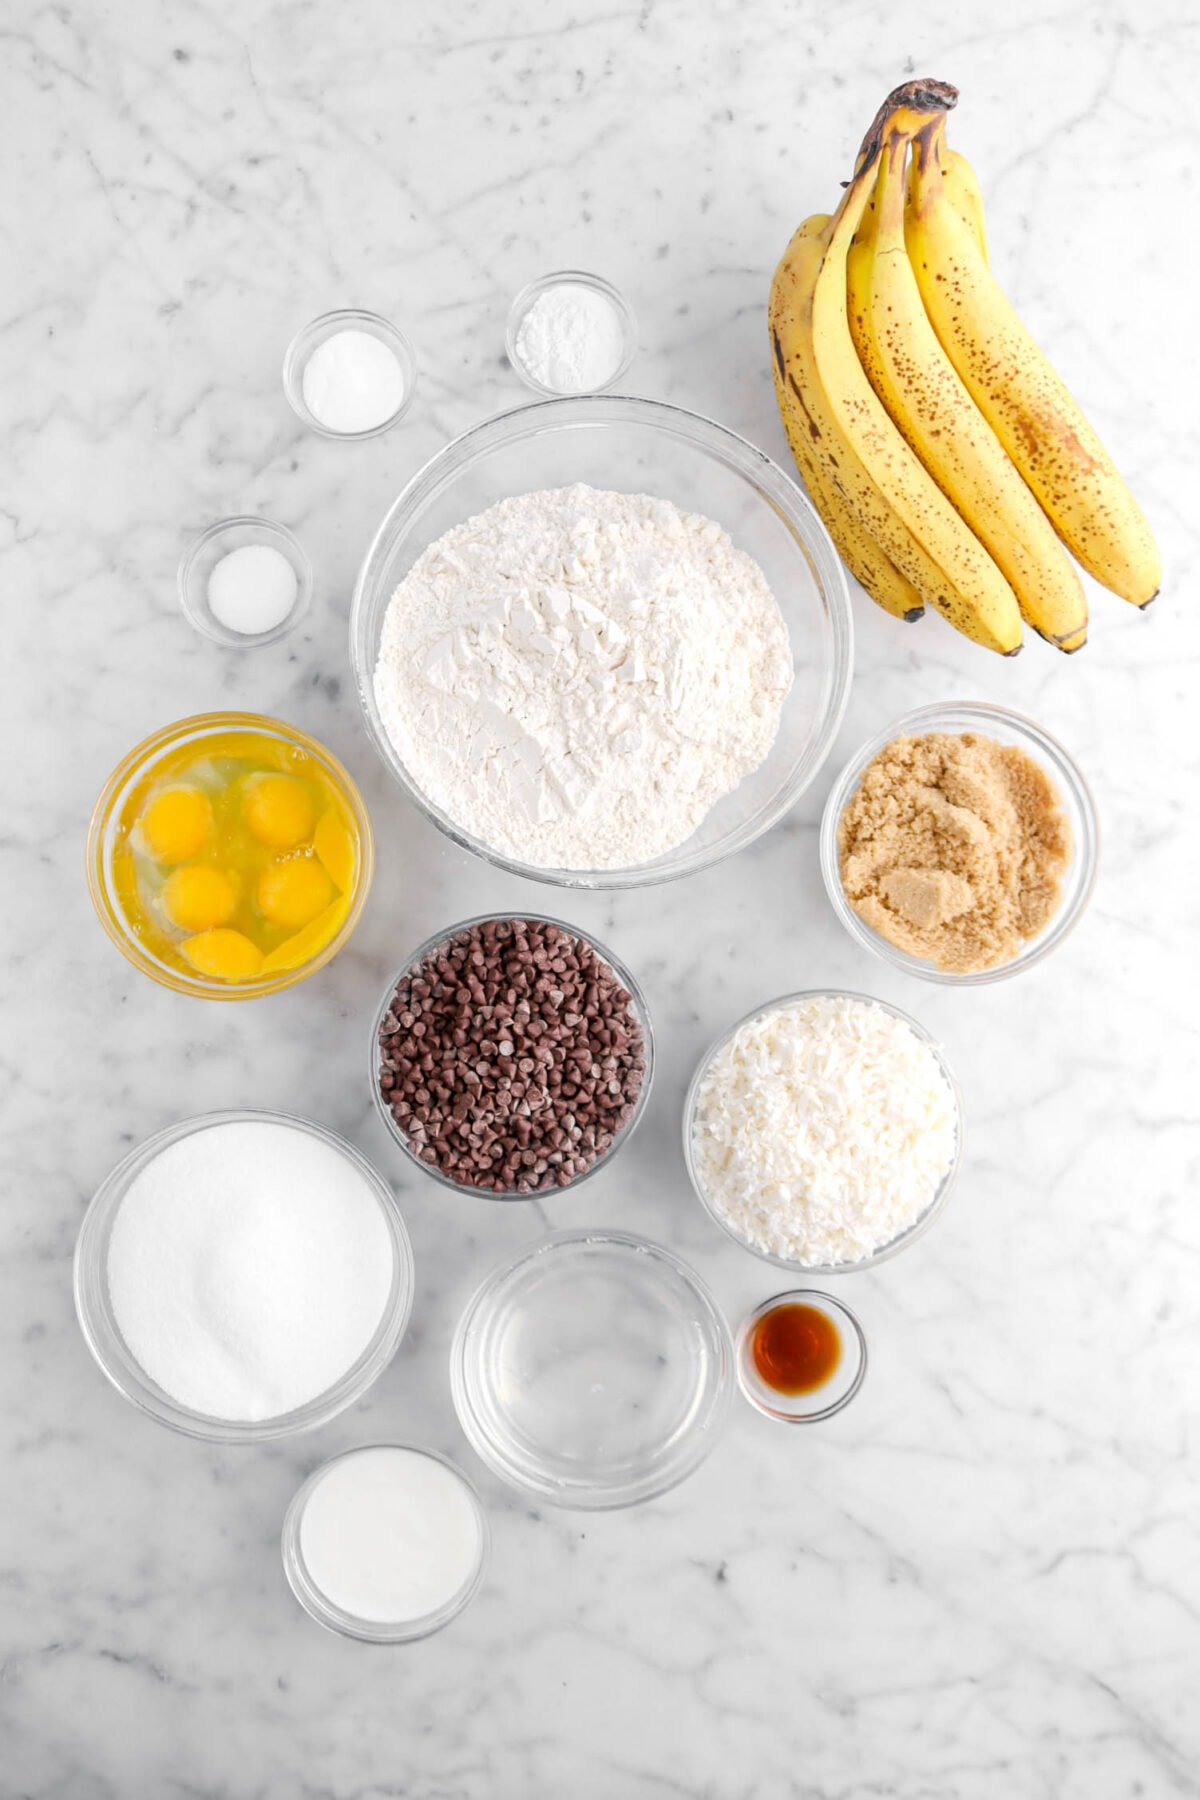 baking powder, baking soda, salt, flour, bananas, eggs, chocolate chips, brown sugar, coconut, vanilla, coconut oil, sugar, and buttermilk on marble surface.